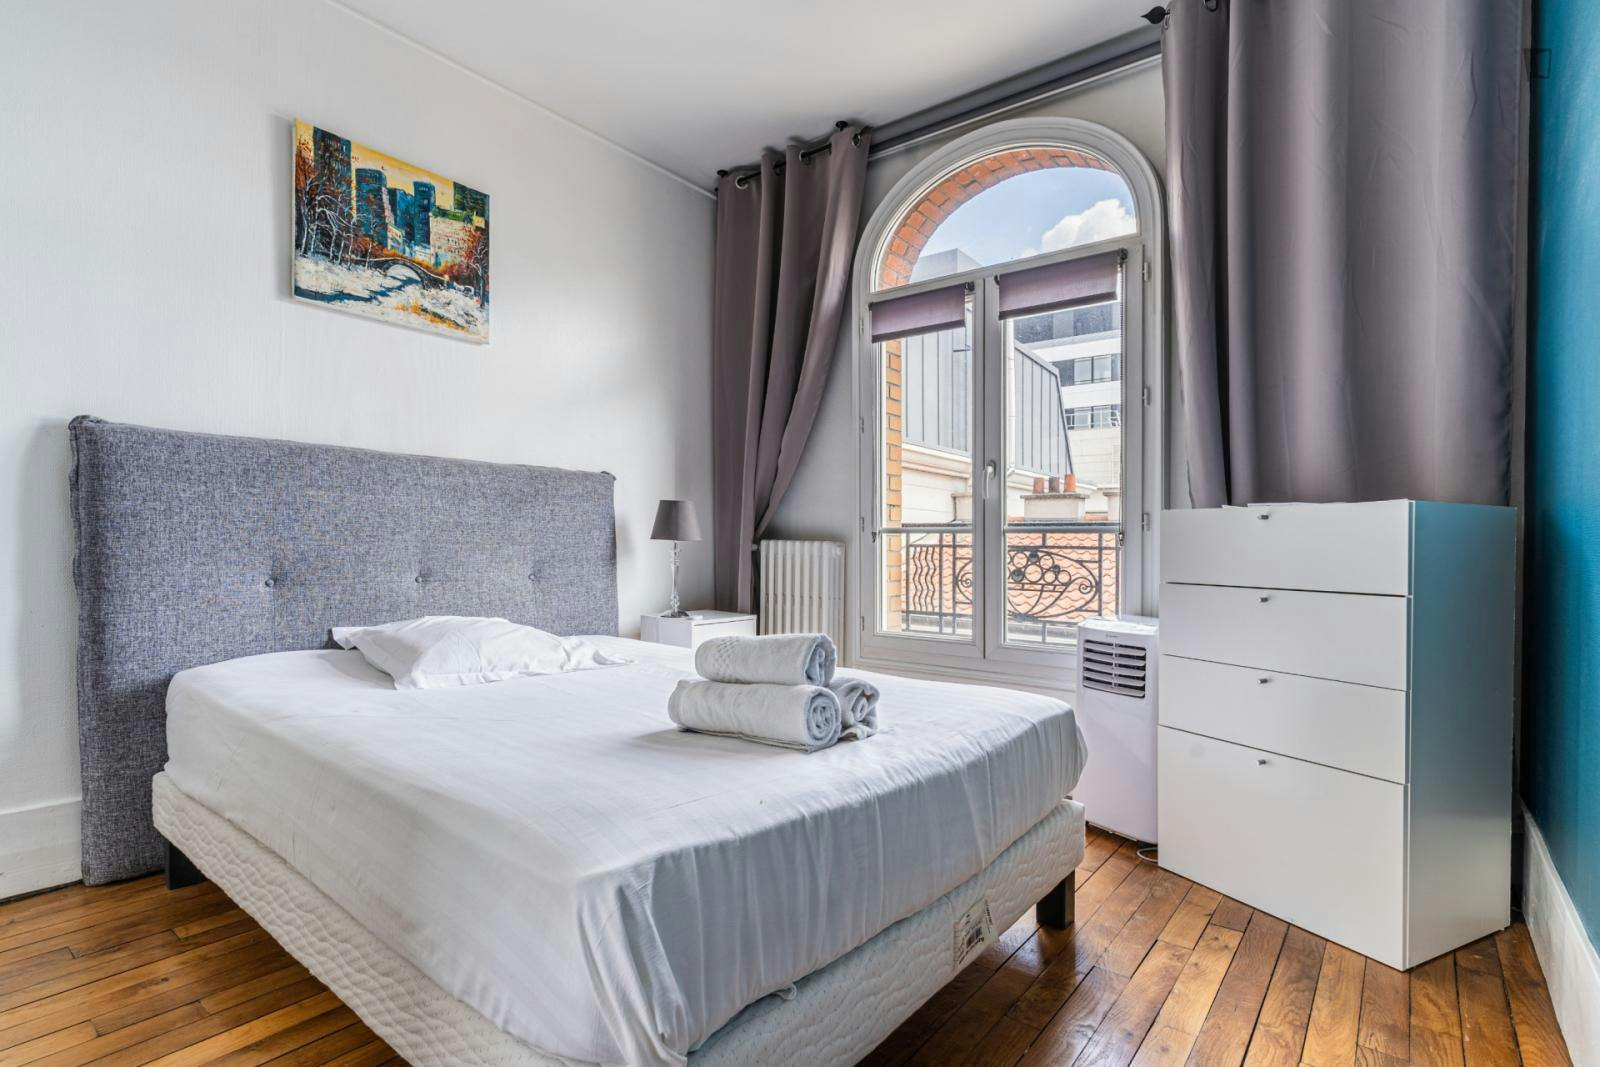 Charming 1-bedroom apartment near Clichy - Levallois train station